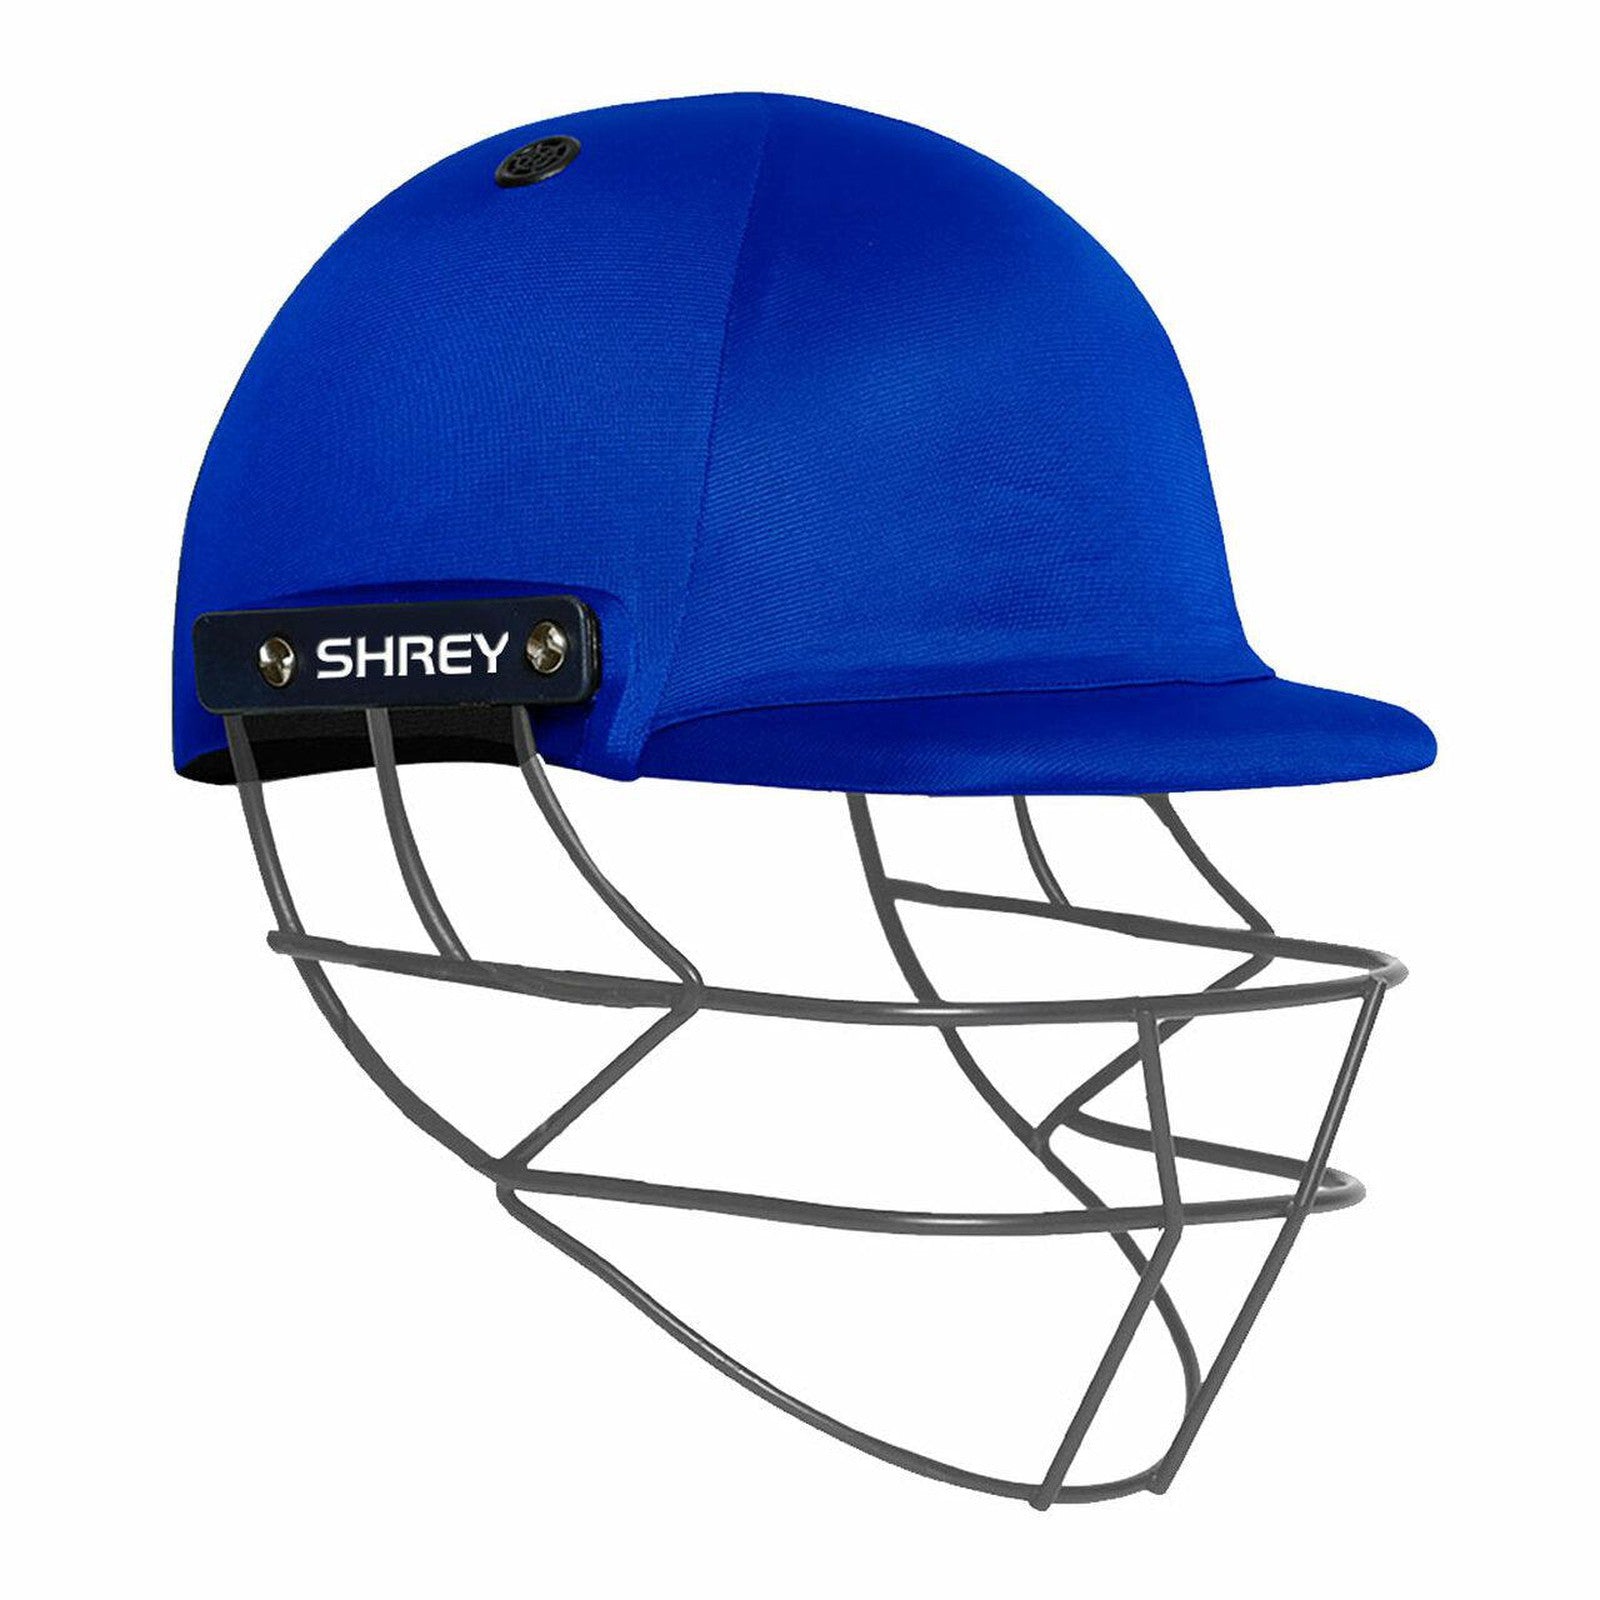 Shrey Performance 2.0 Cricket Helmet With Mild Steel - Royal Blue Junior